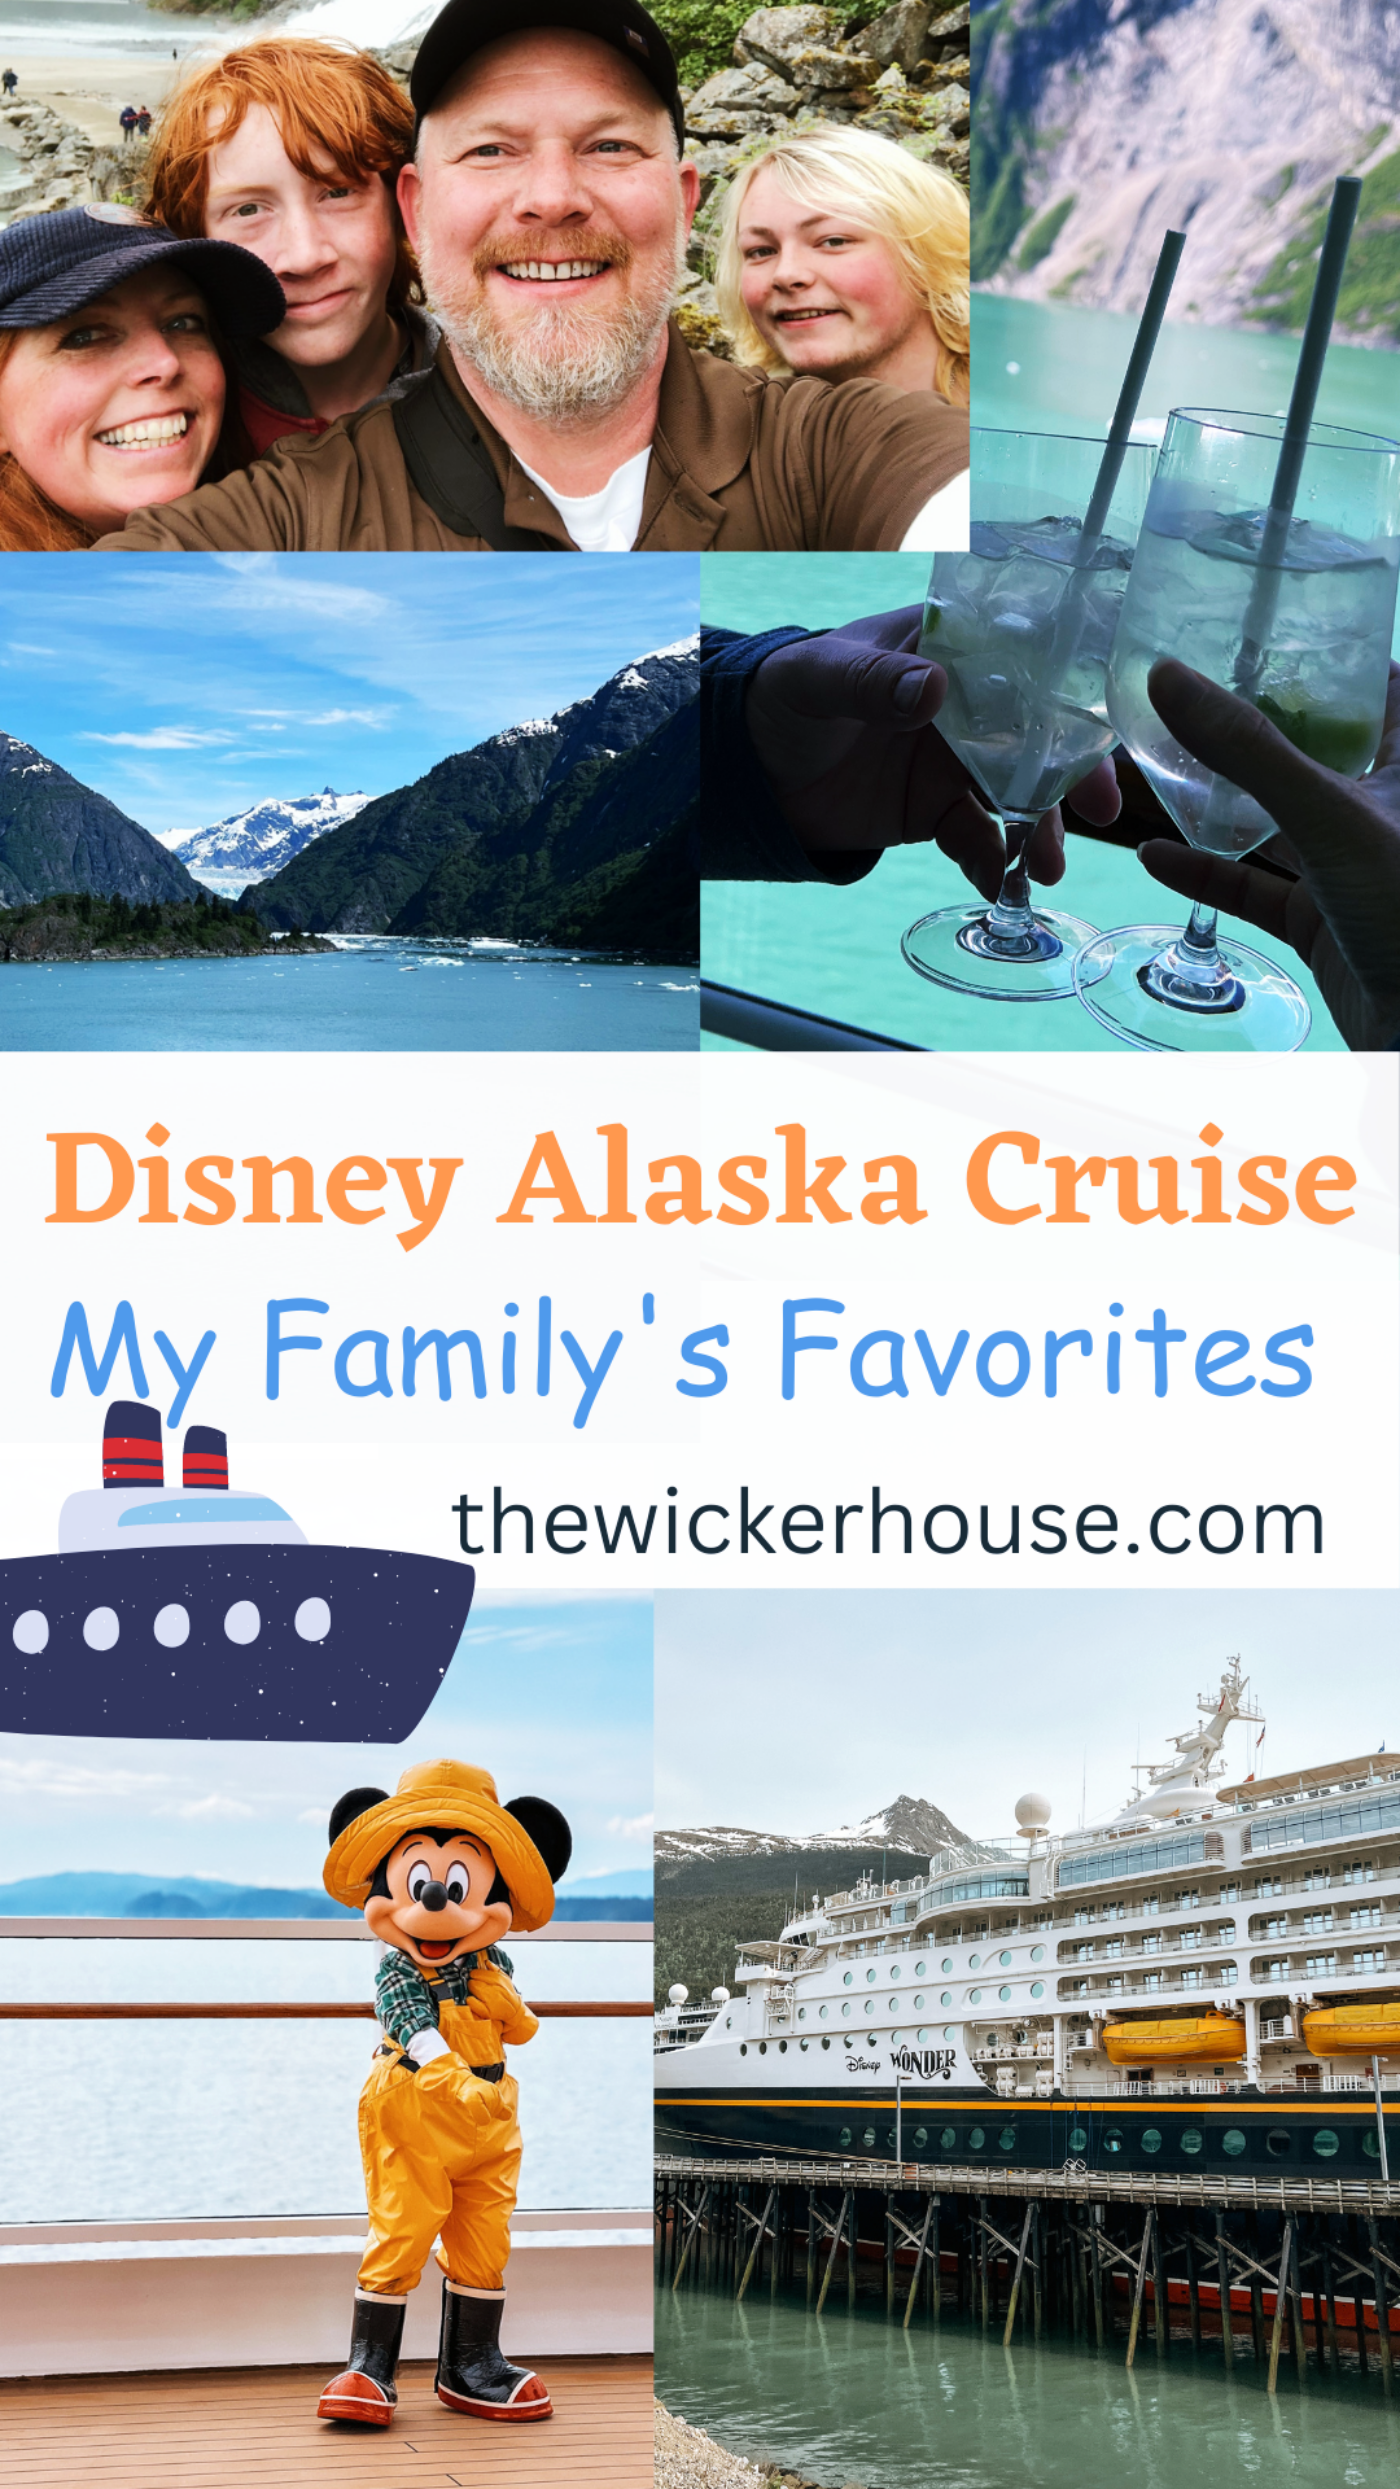 Disney Alaska Cruise - My Family's Favorites